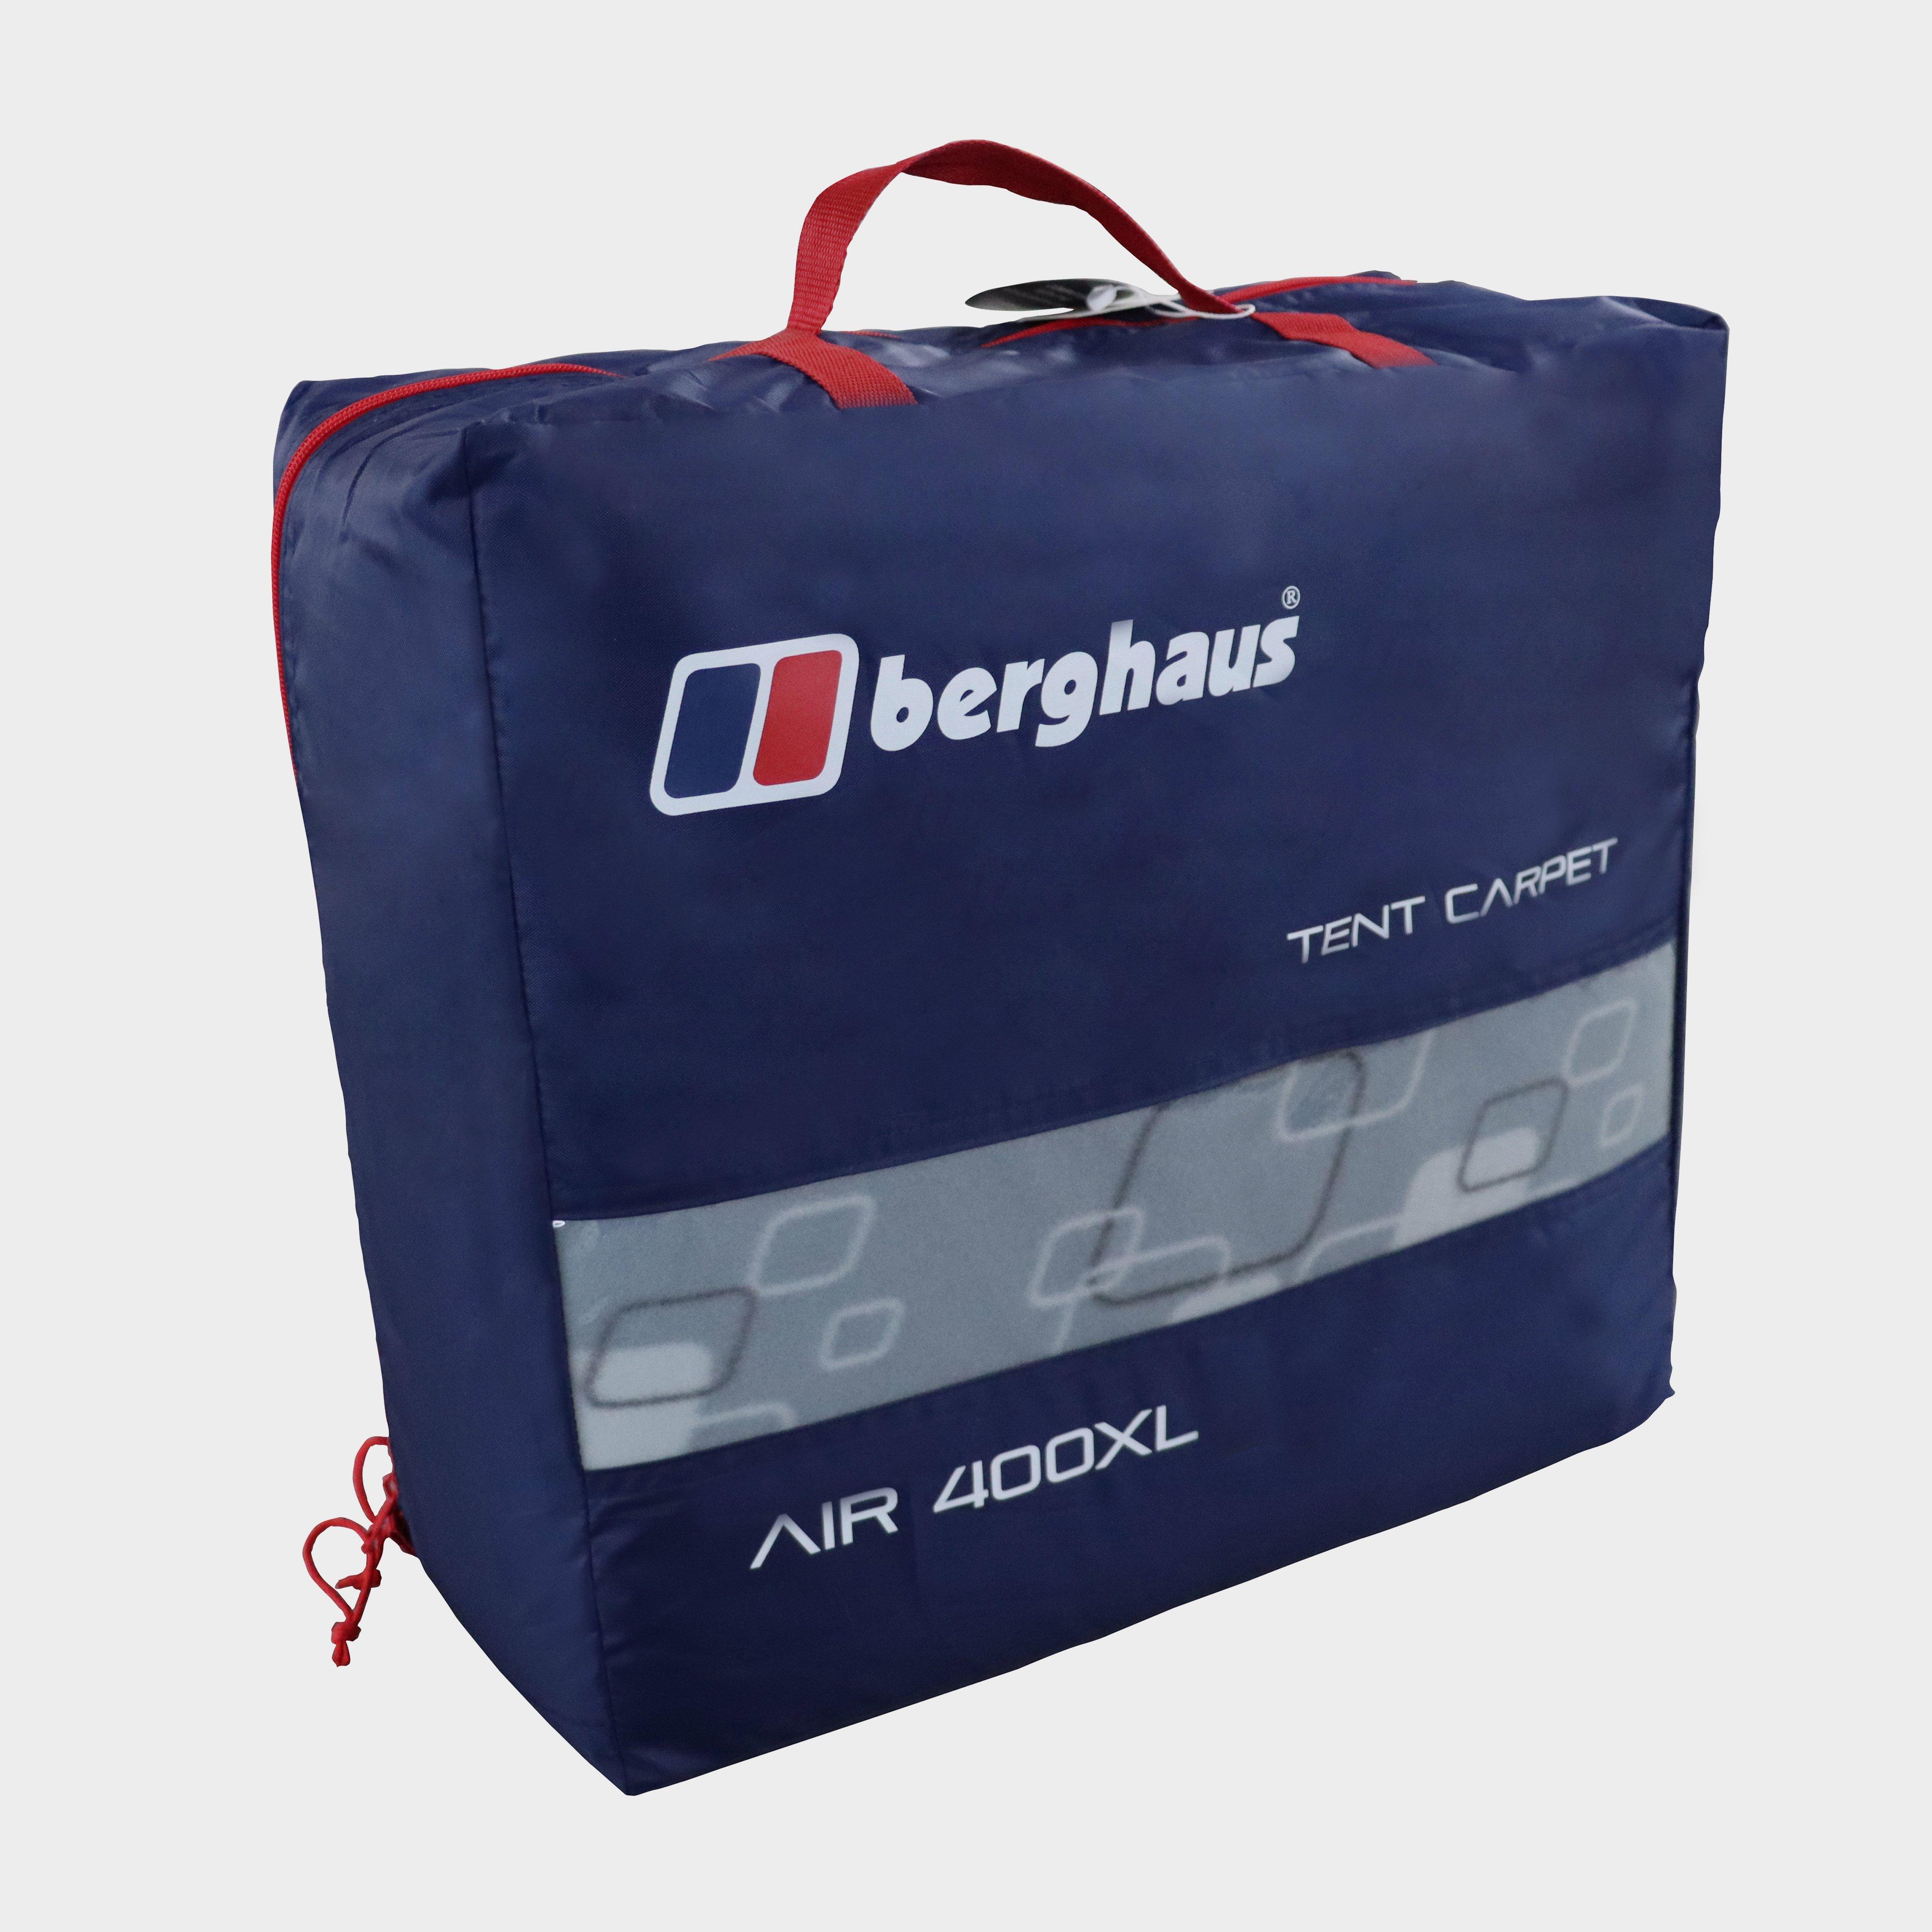 Berghaus Berghaus Air 400Xl/4.1Xl/4Xl Tent Carpet - Dark Grey, Dark Grey